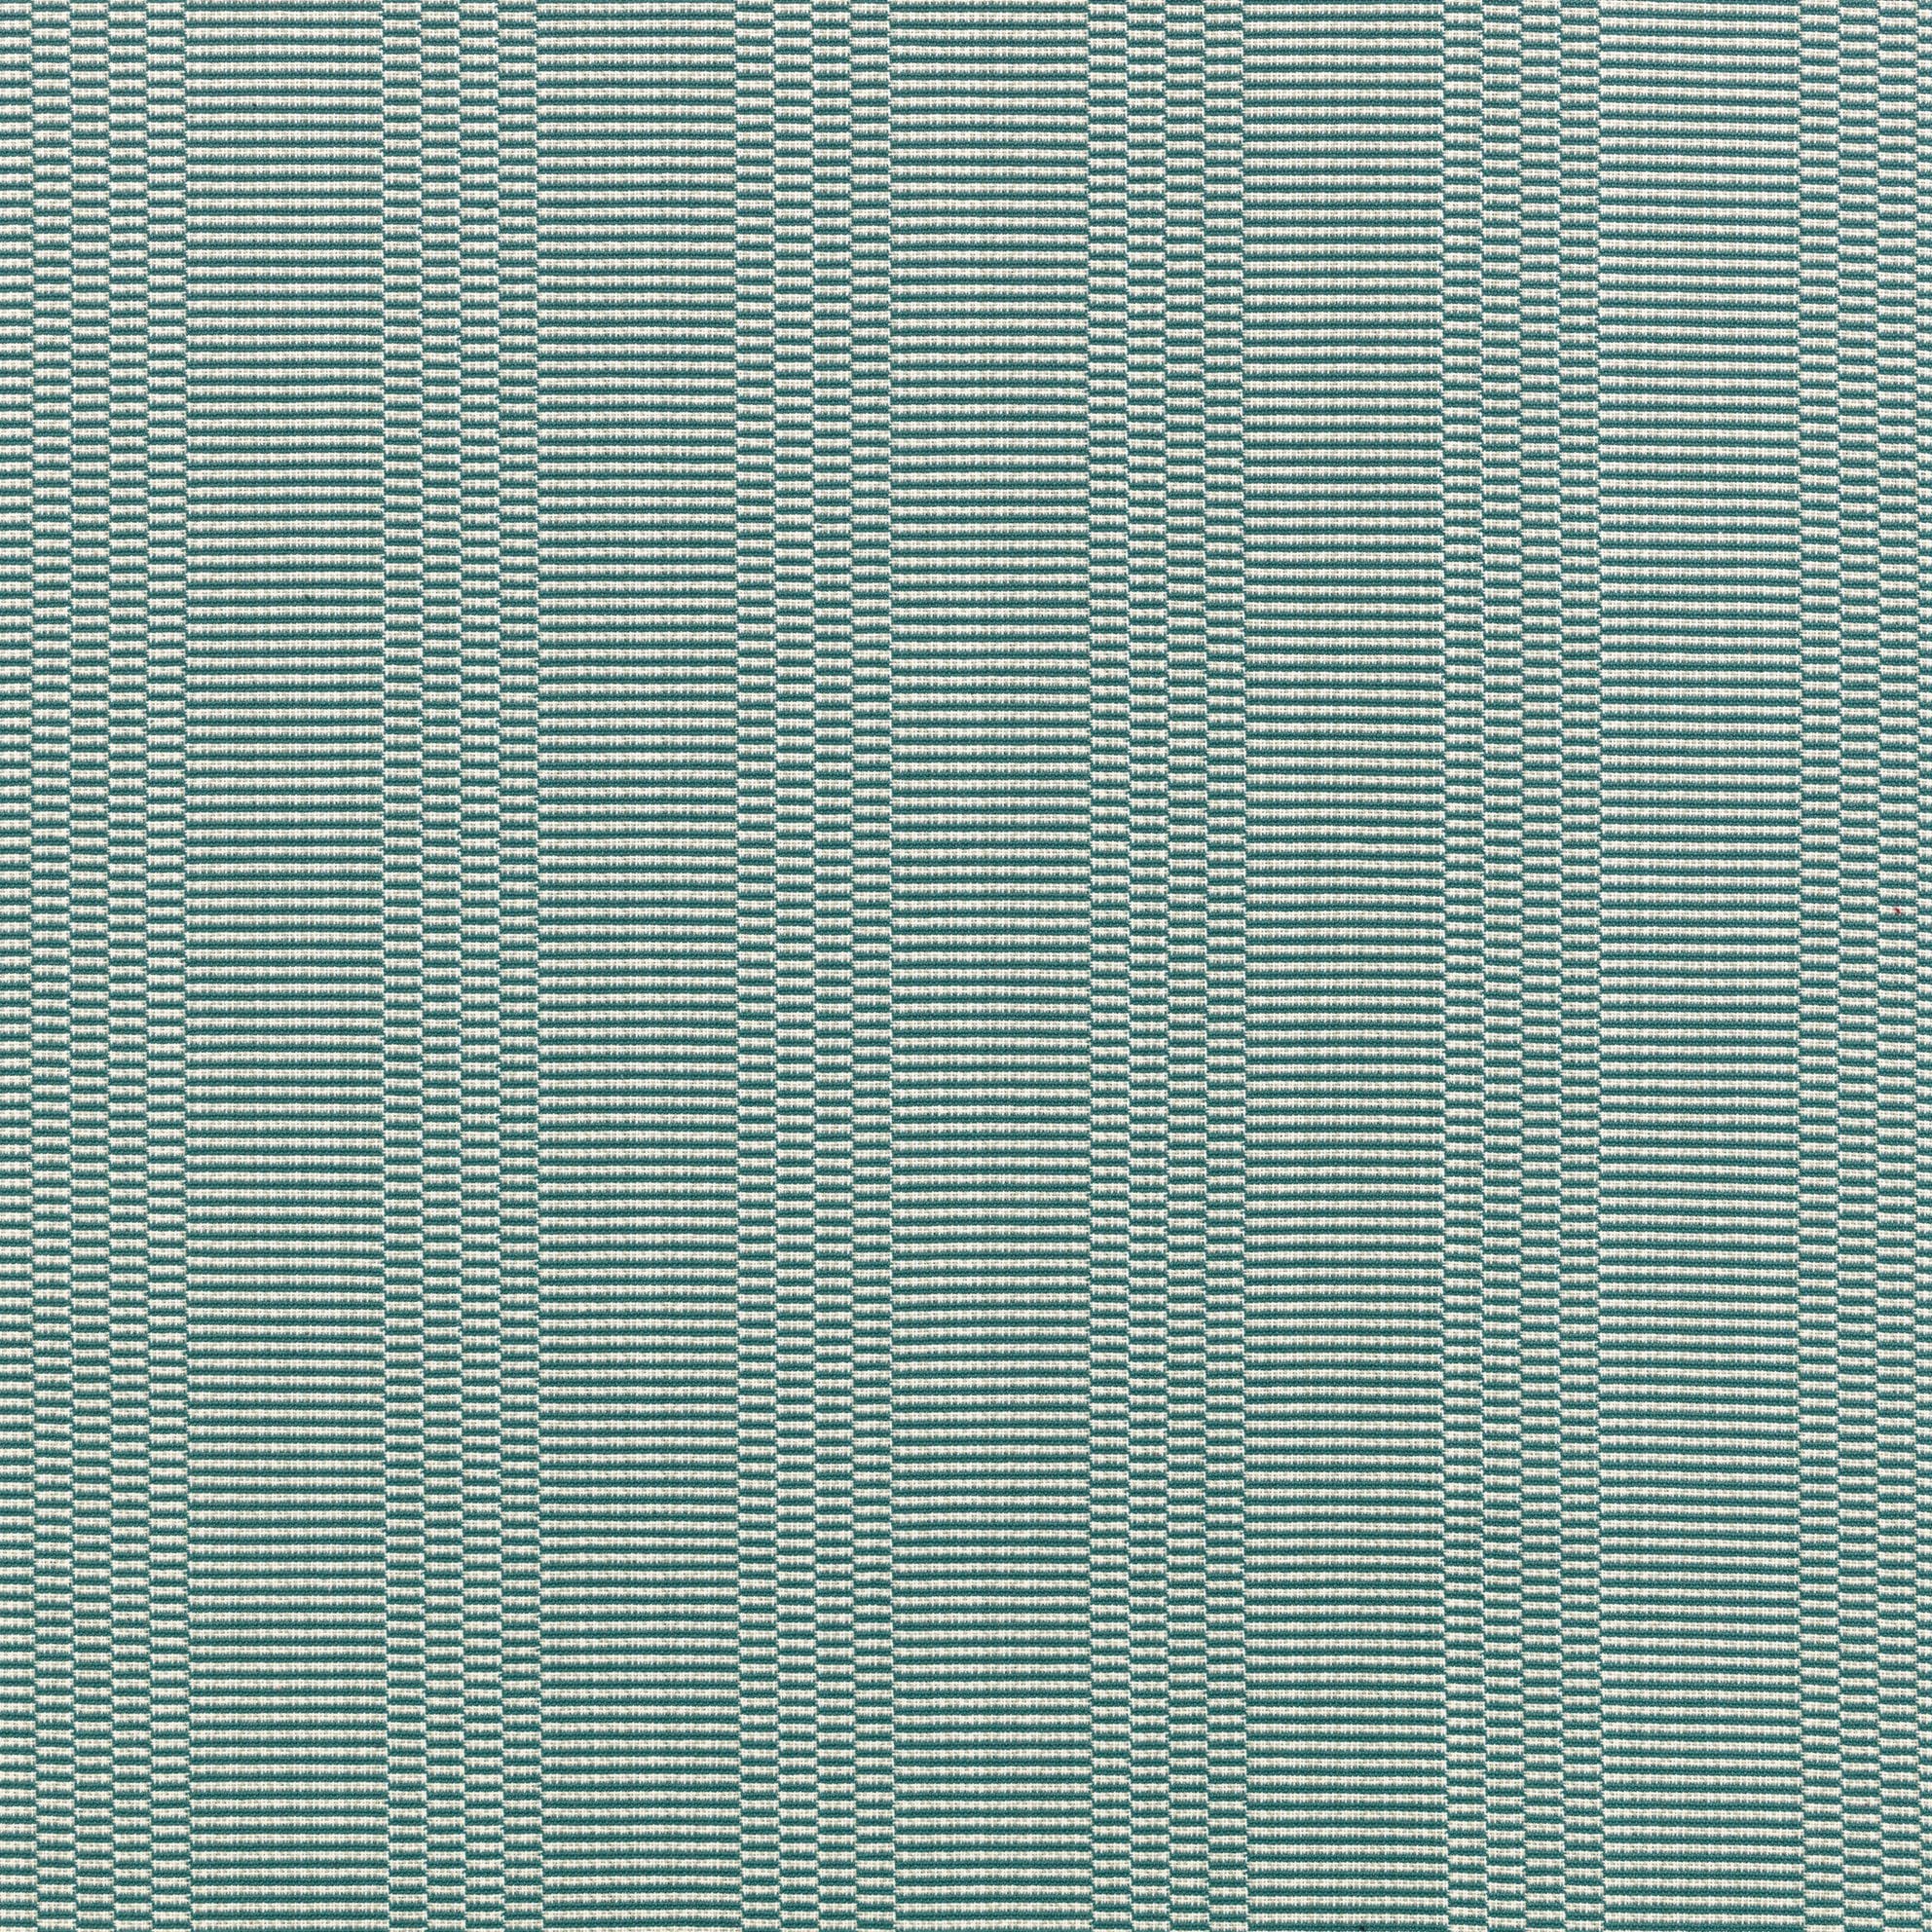 Eos Cotton Fabric - Green | Nicholas Engert Interiors